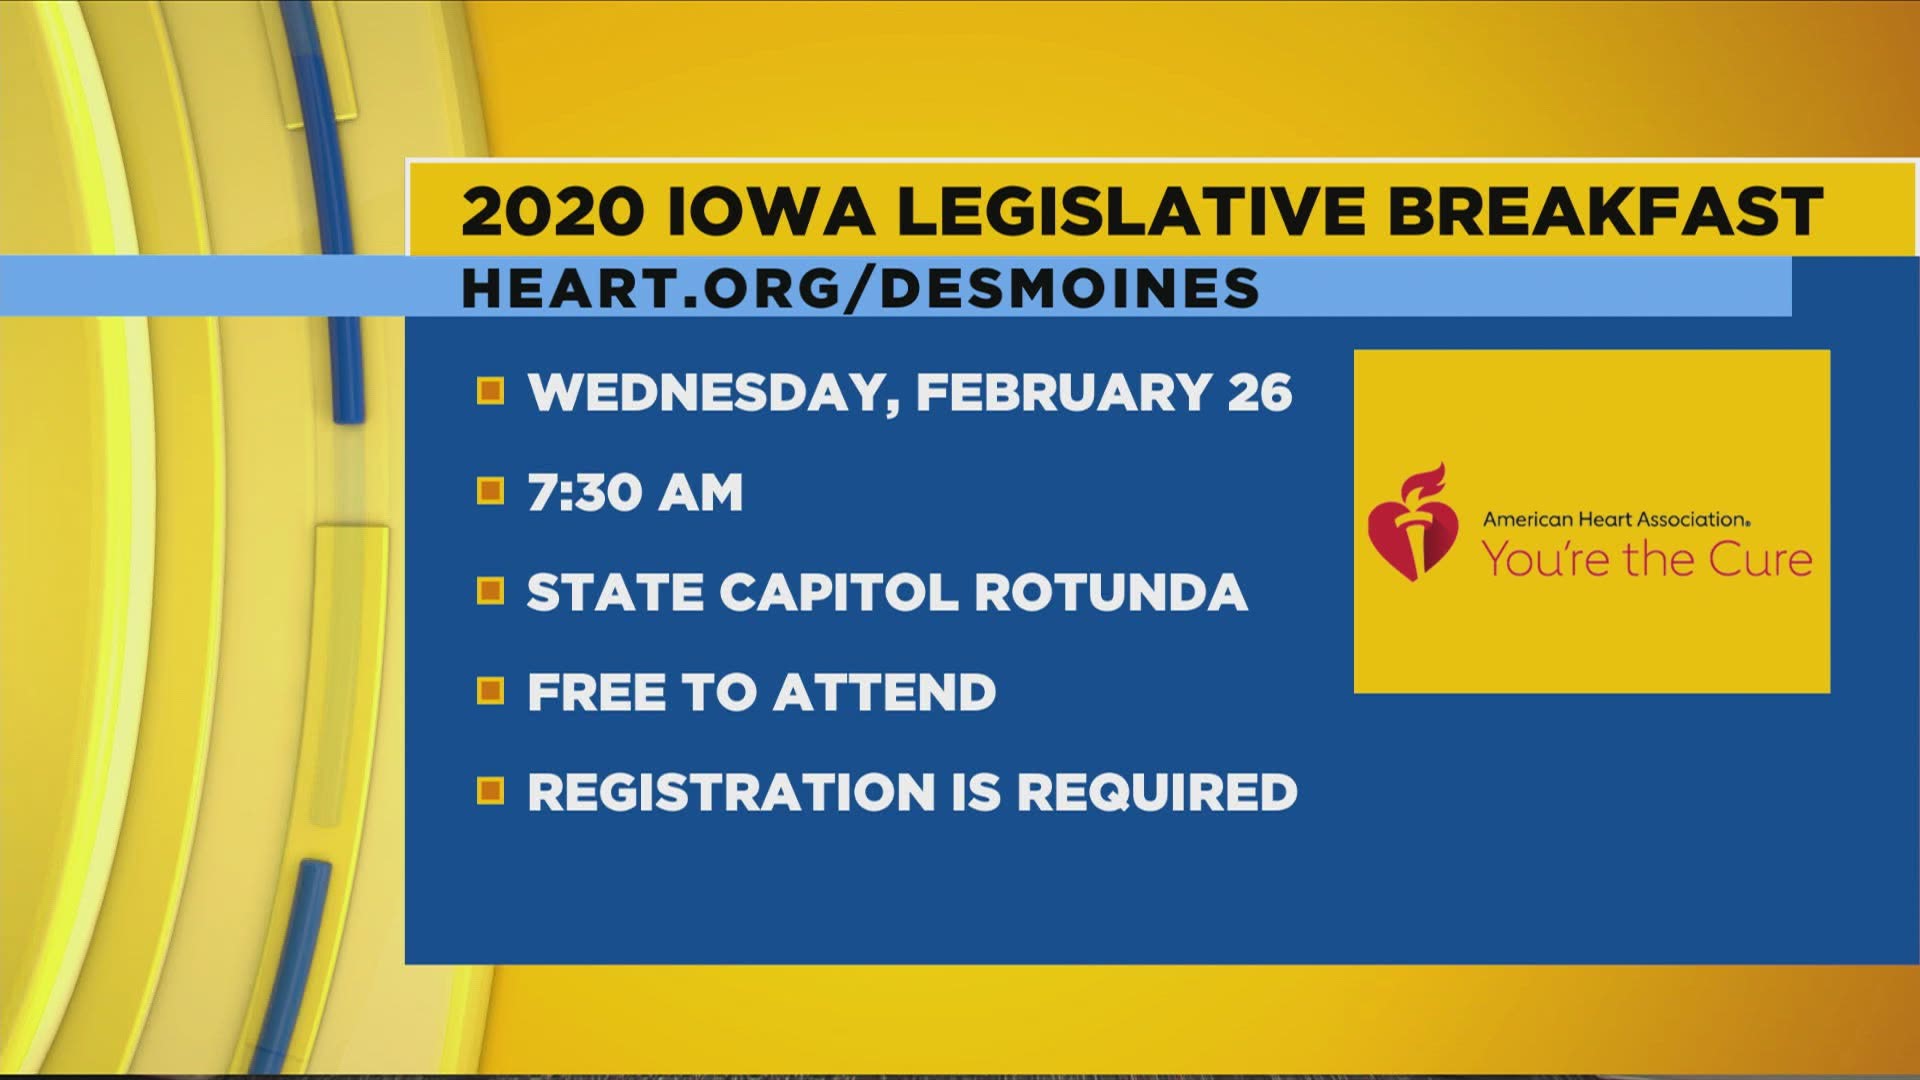 2020 Iowa Legislative Breakfast, February 26, 7:30 a.m. - 9:00 p.m. at the State Capitol Rotunda.